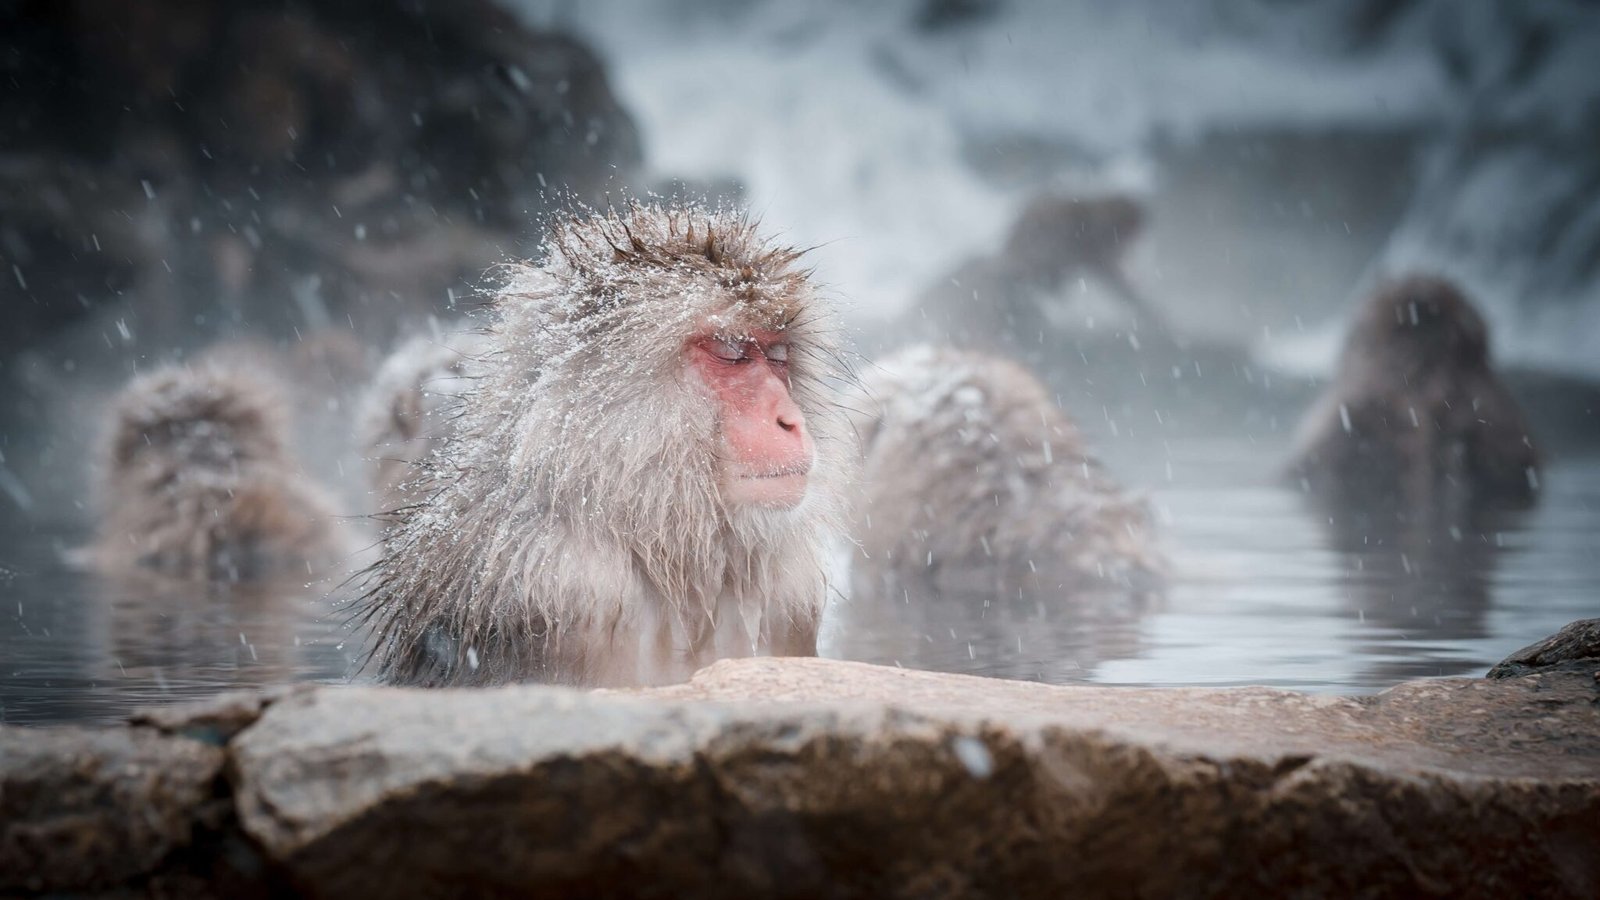 snow monkeys in Japan, winter bucket list destinations